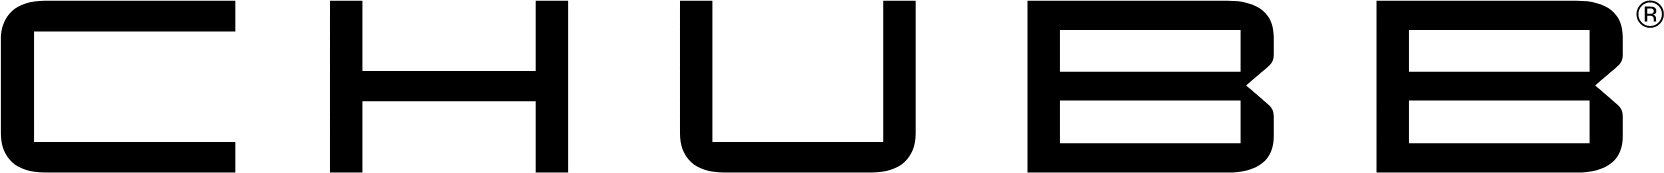 Chubb logo large (transparent PNG)